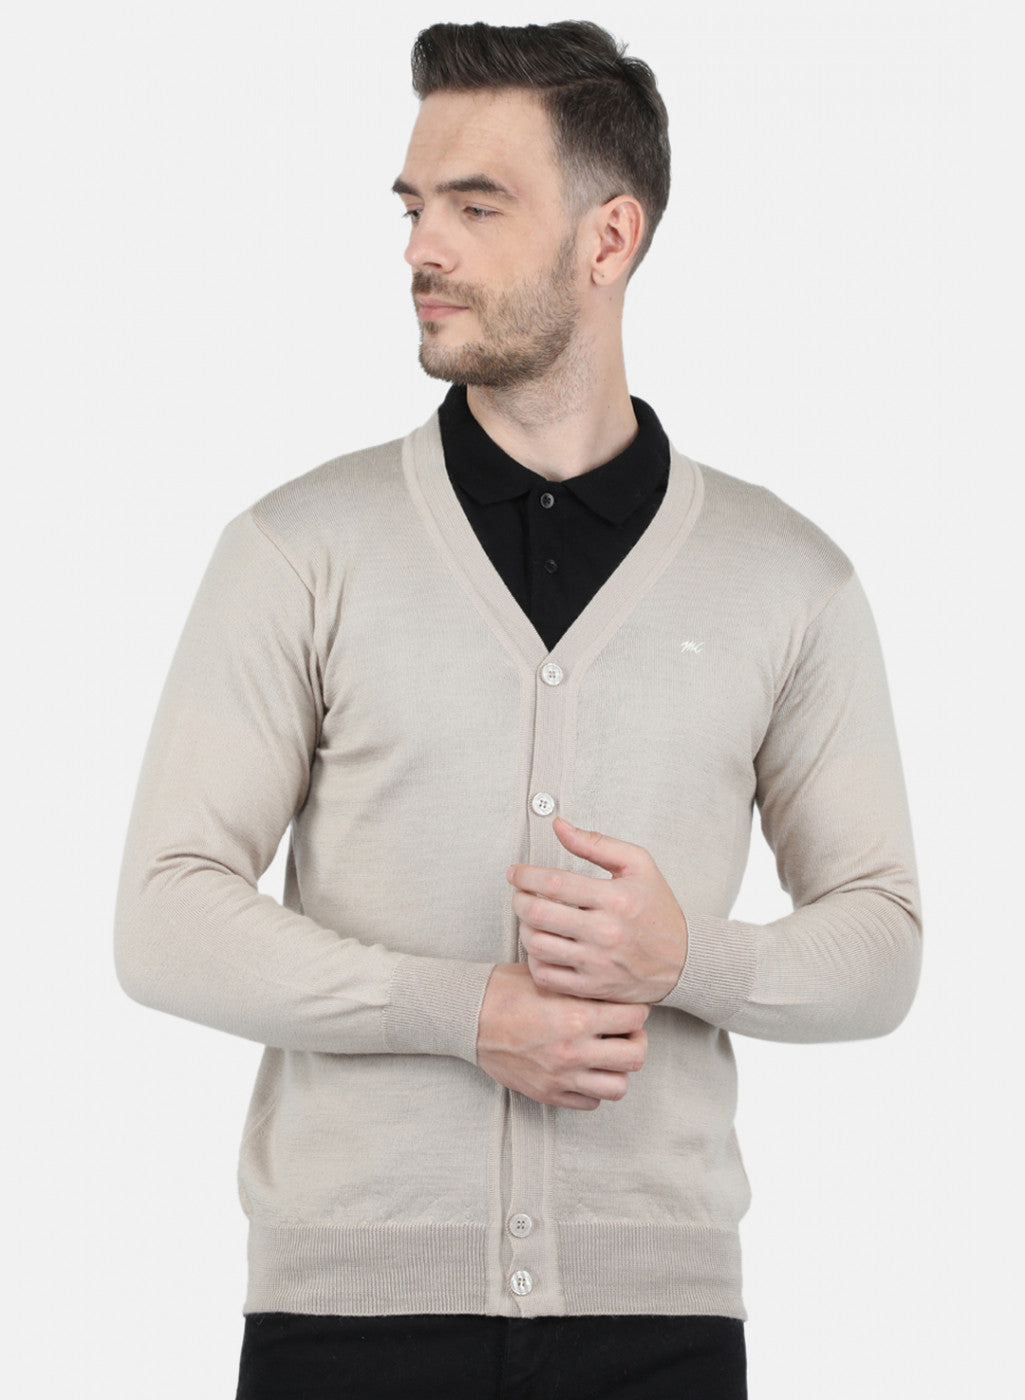 Buy Men Beige Solid V Neck Sleeveless Sweater Online in India - Monte Carlo